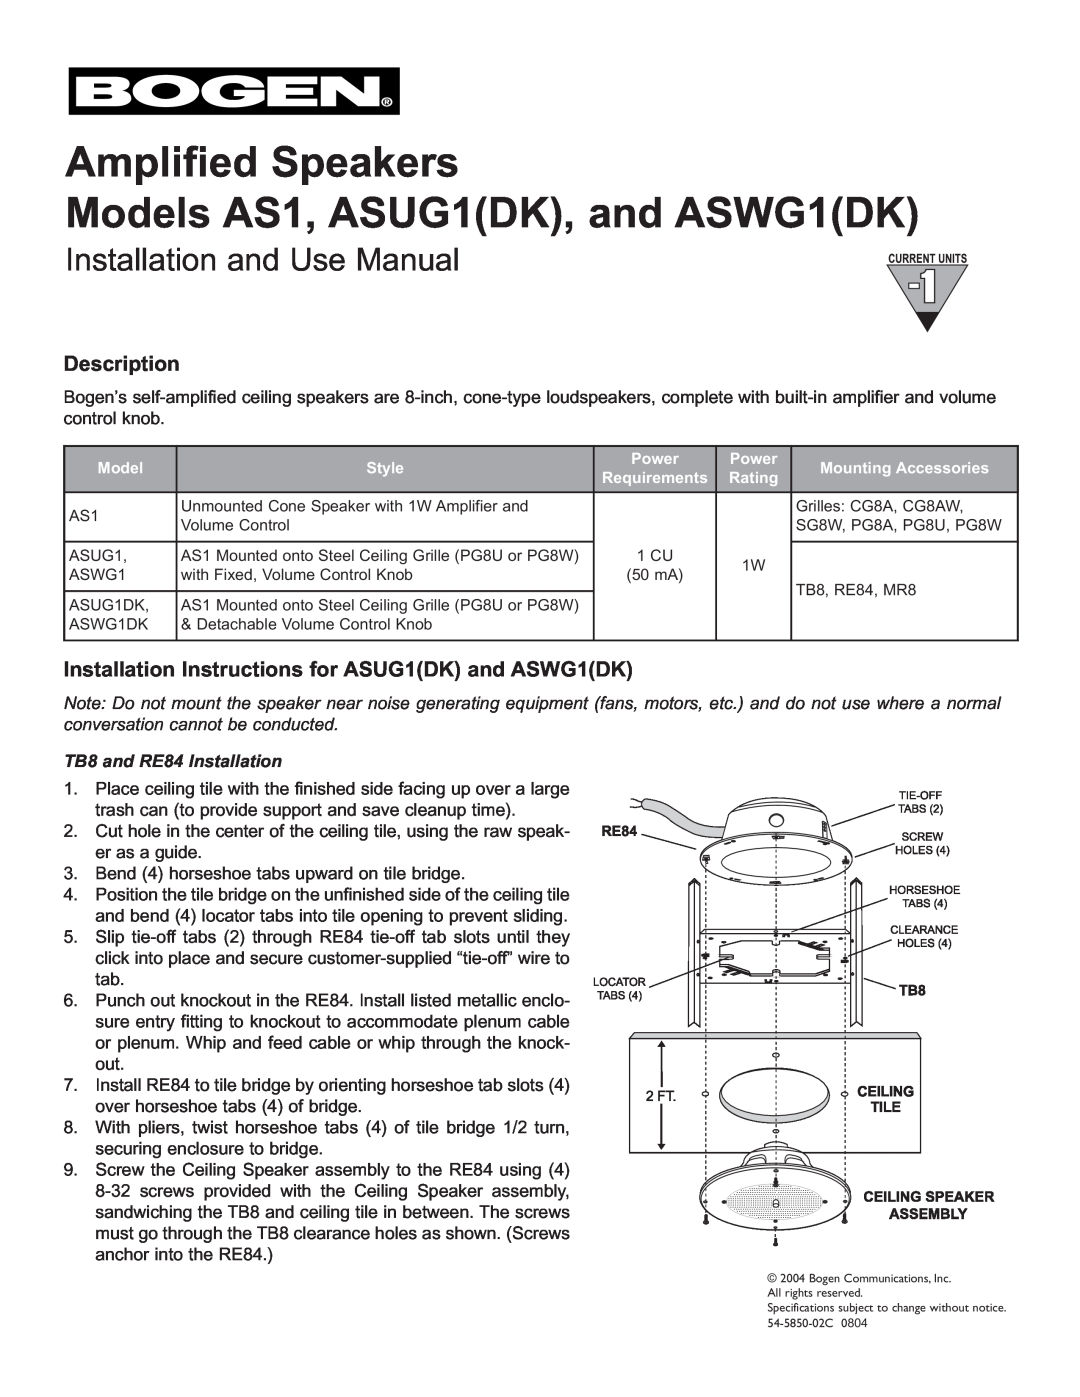 Bogen installation instructions Description, Installation Instructions for ASUG1DK and ASWG1DK, Amplified Speakers 